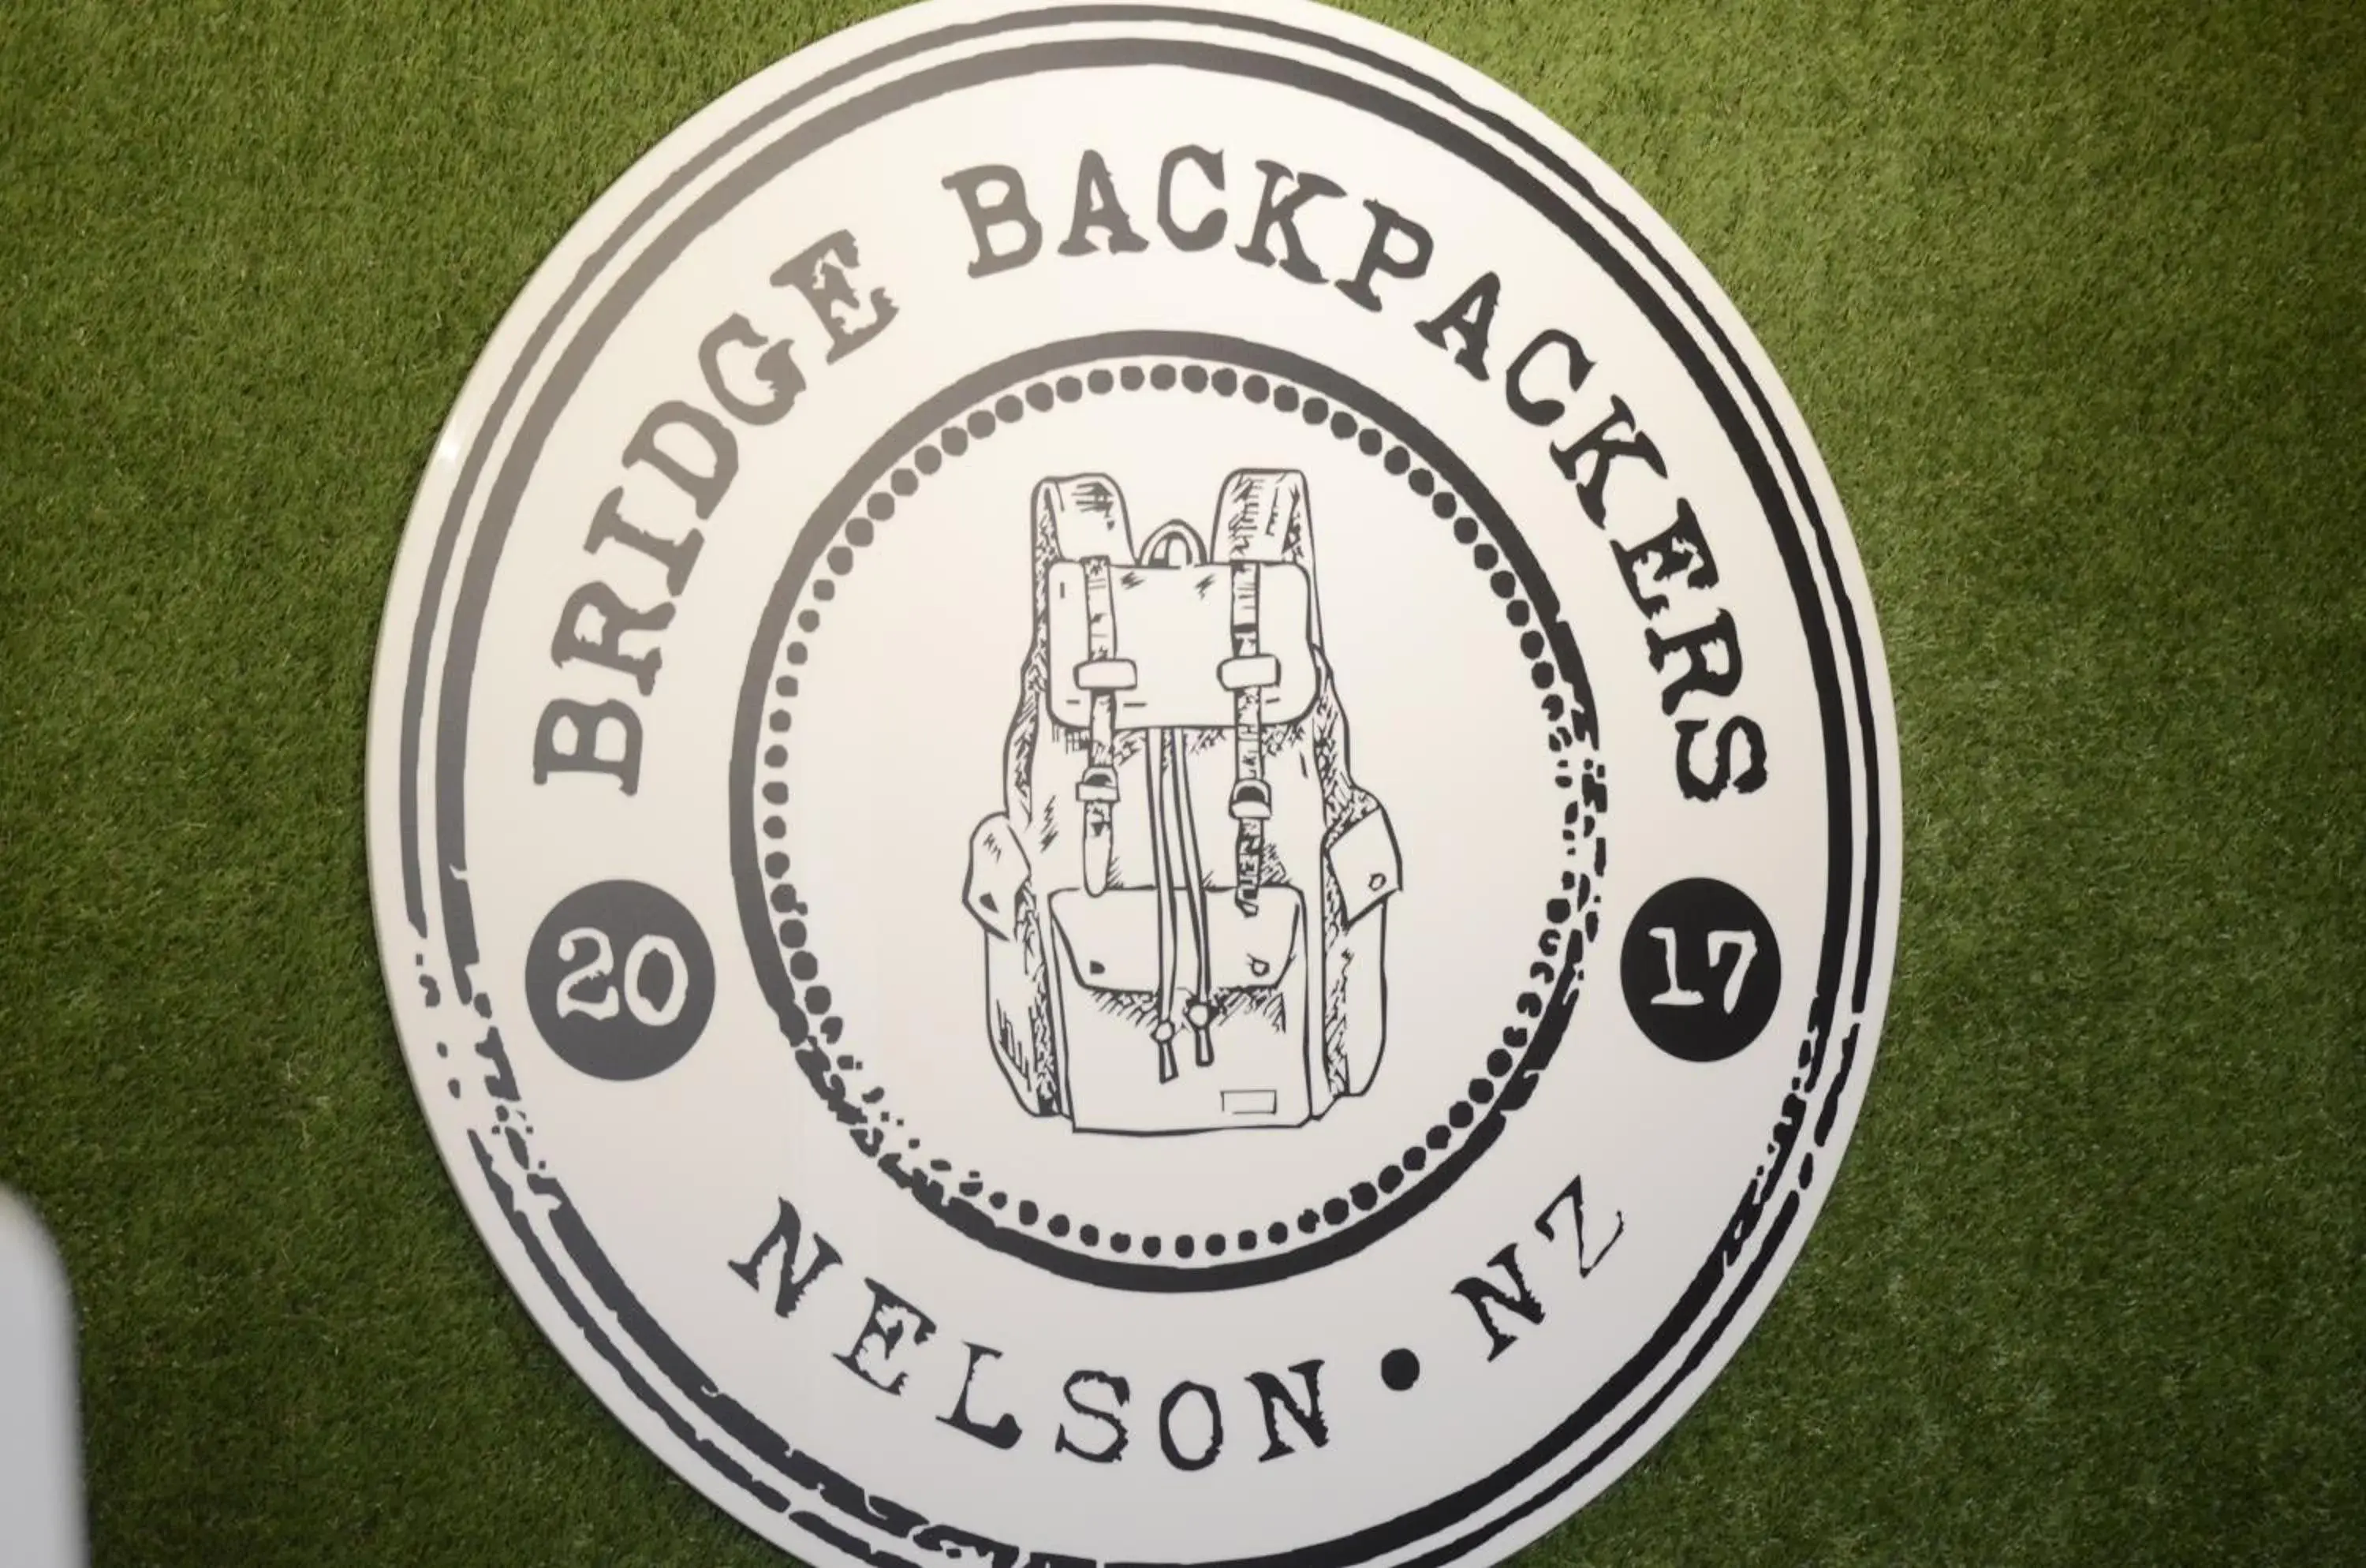 Decorative detail in Bridge Backpackers